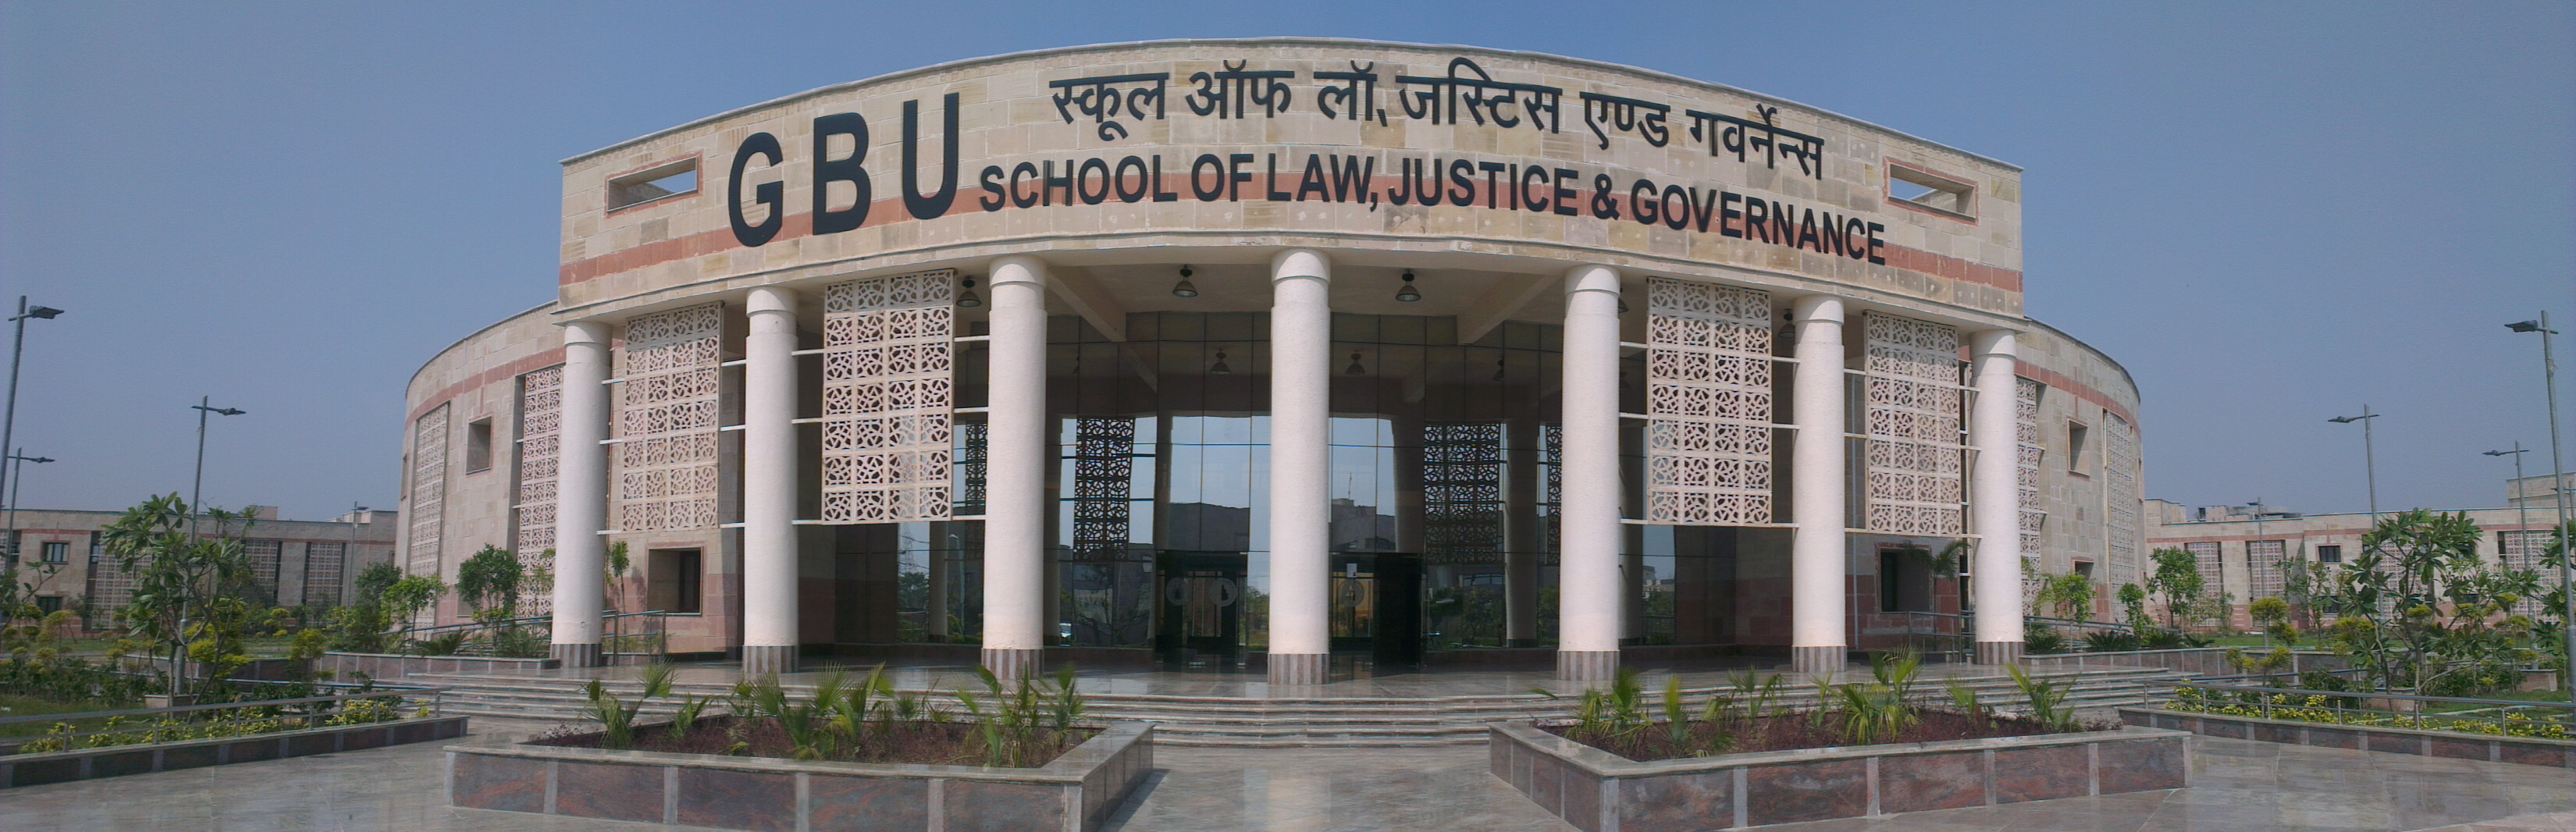 School of Law Justice and Governance, Gautam Buddha University